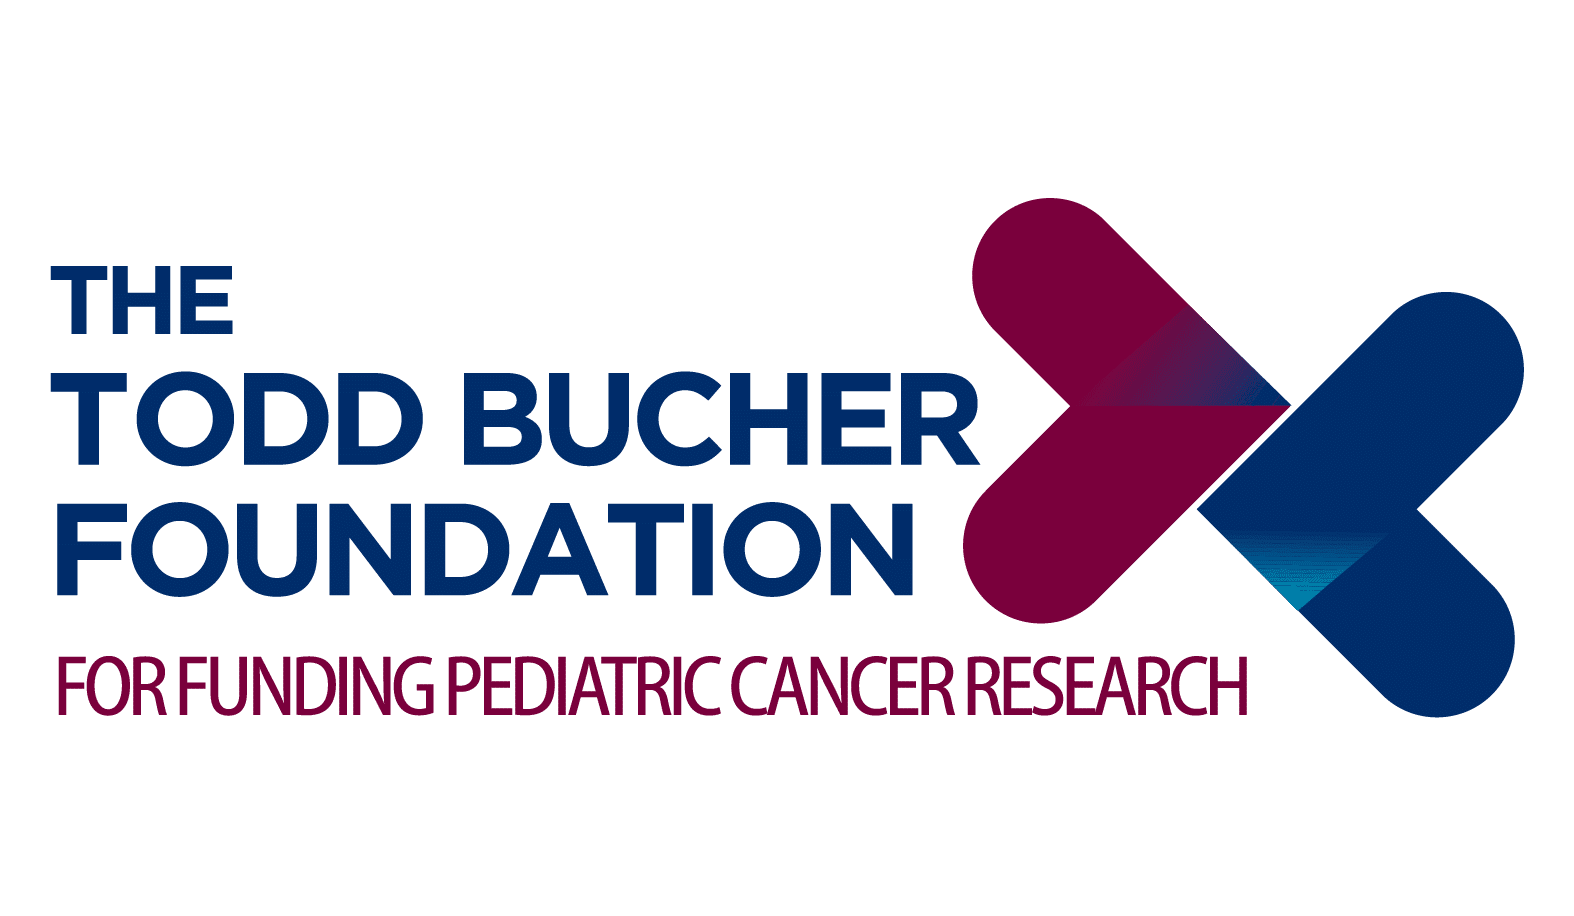 paula takacs foundation todd bucher foundation logo